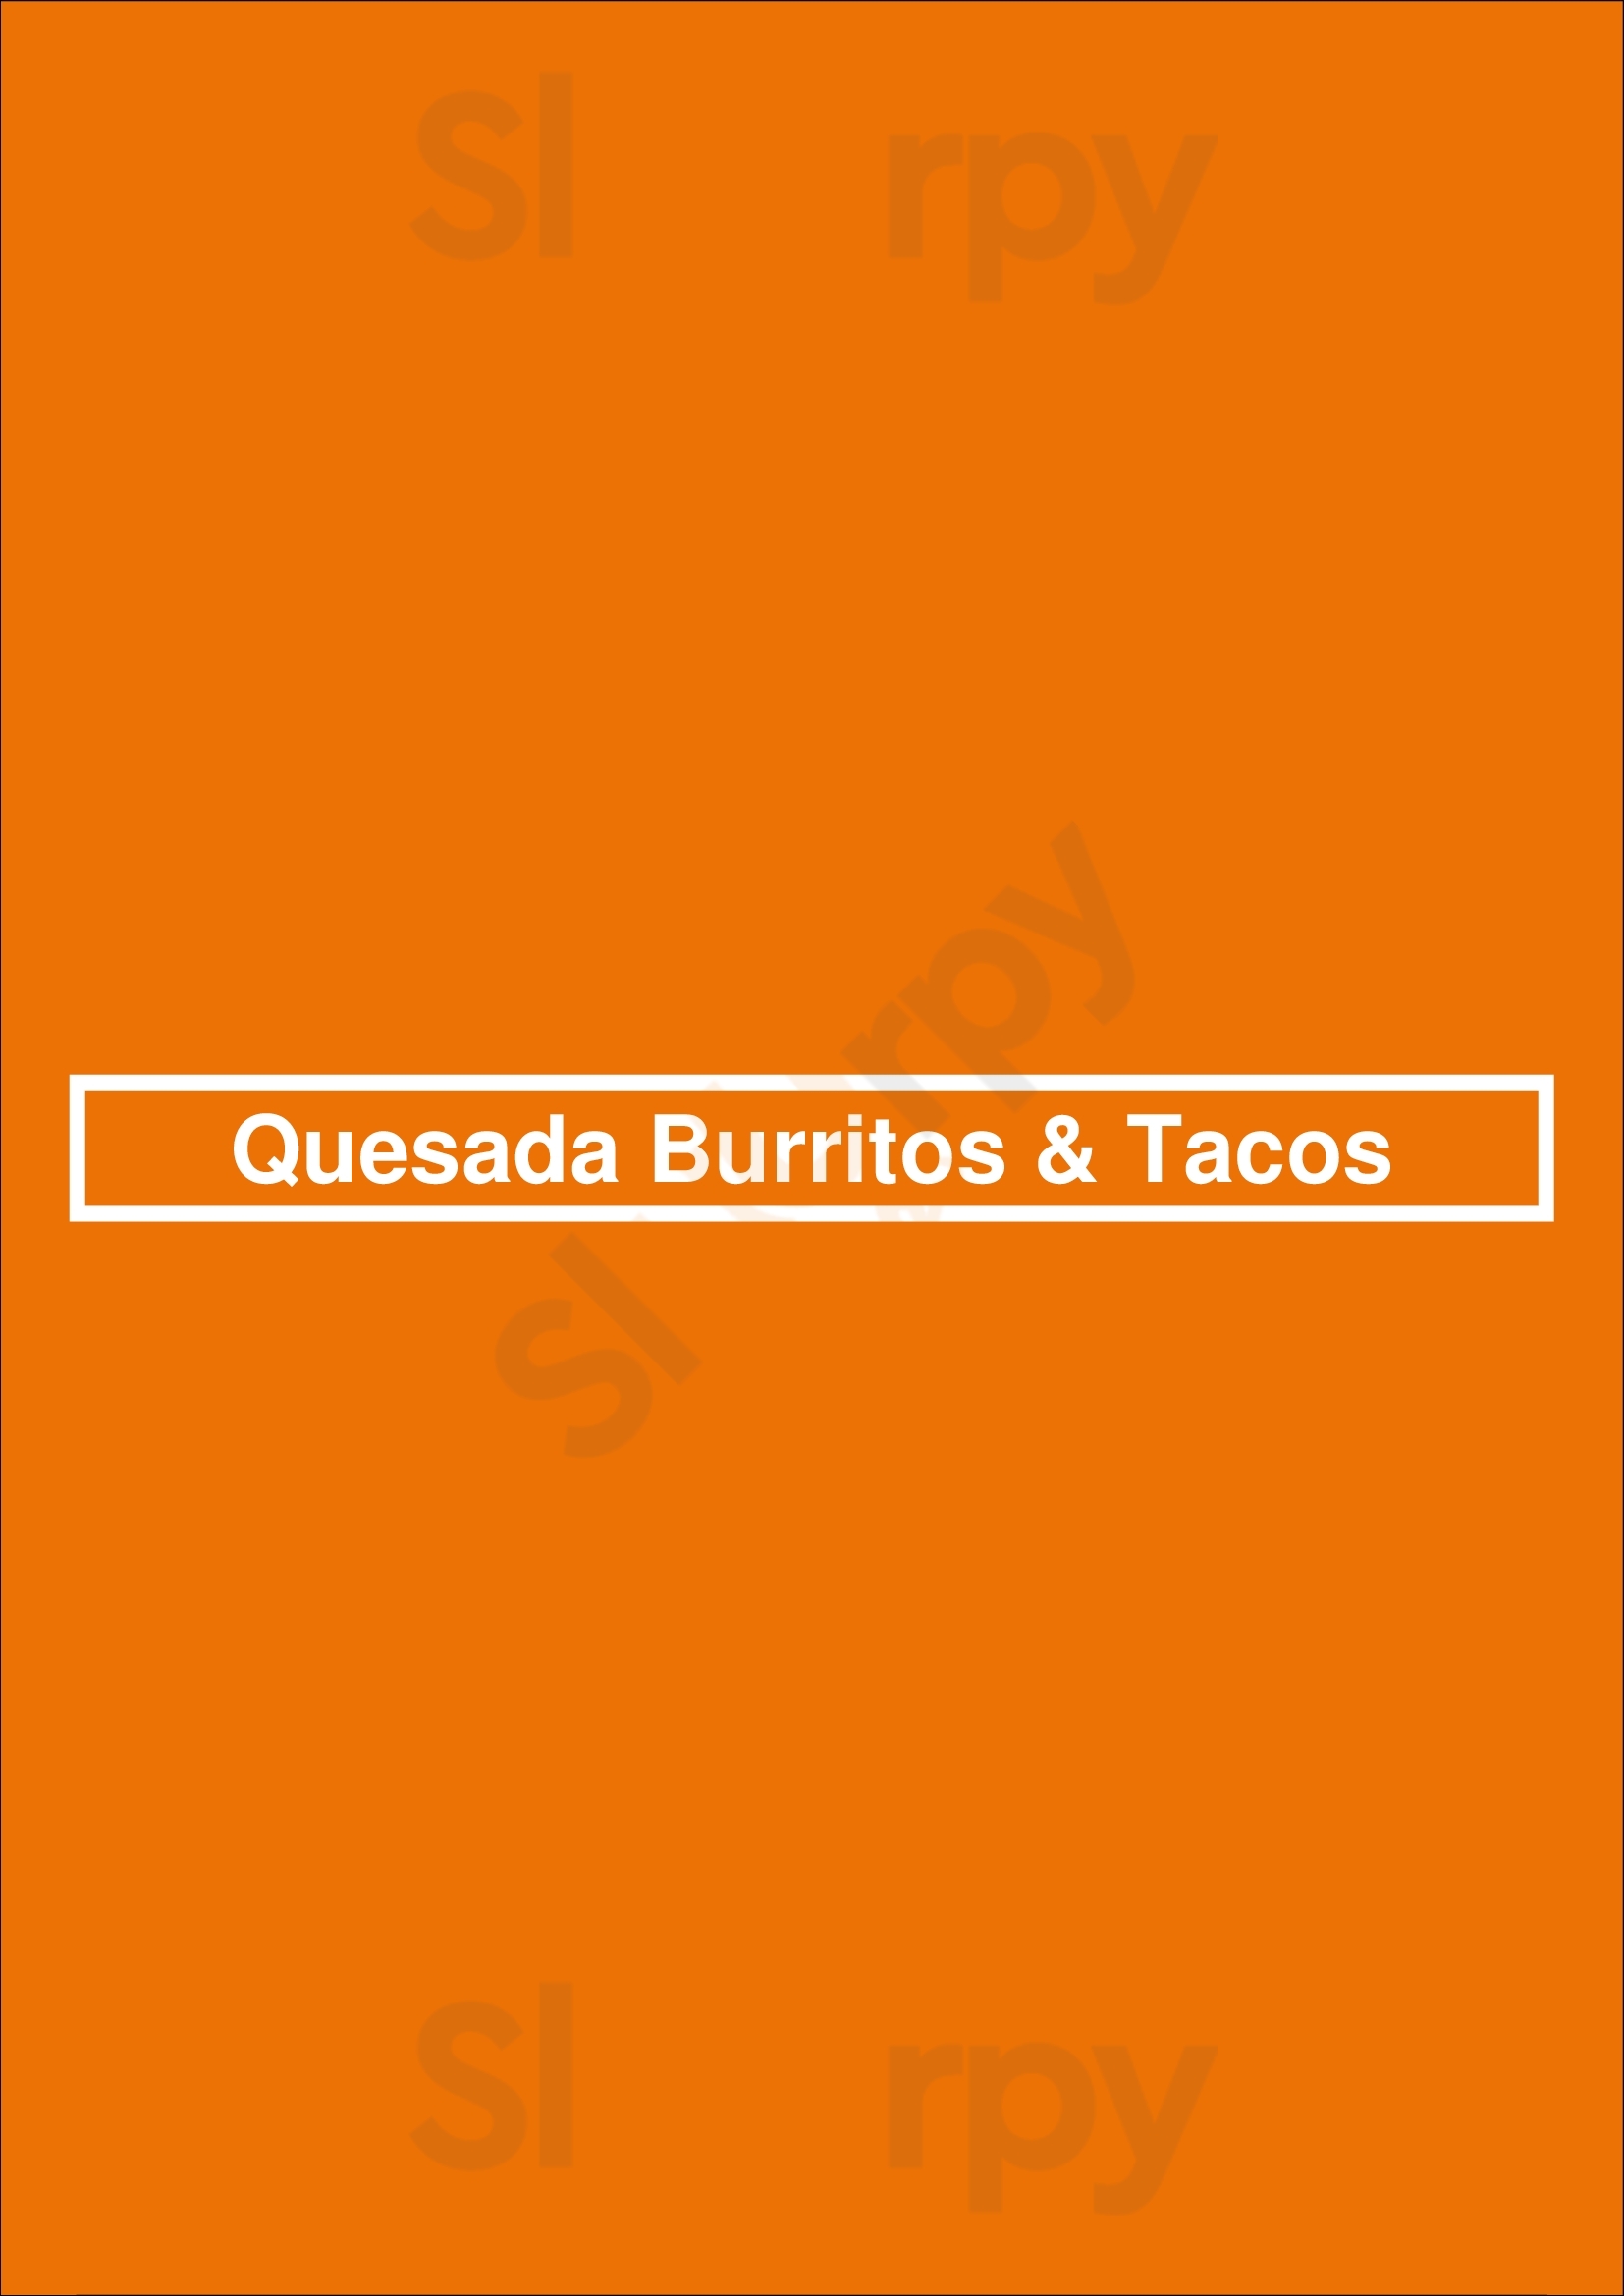 Quesada Burritos & Tacos Edmonton Menu - 1